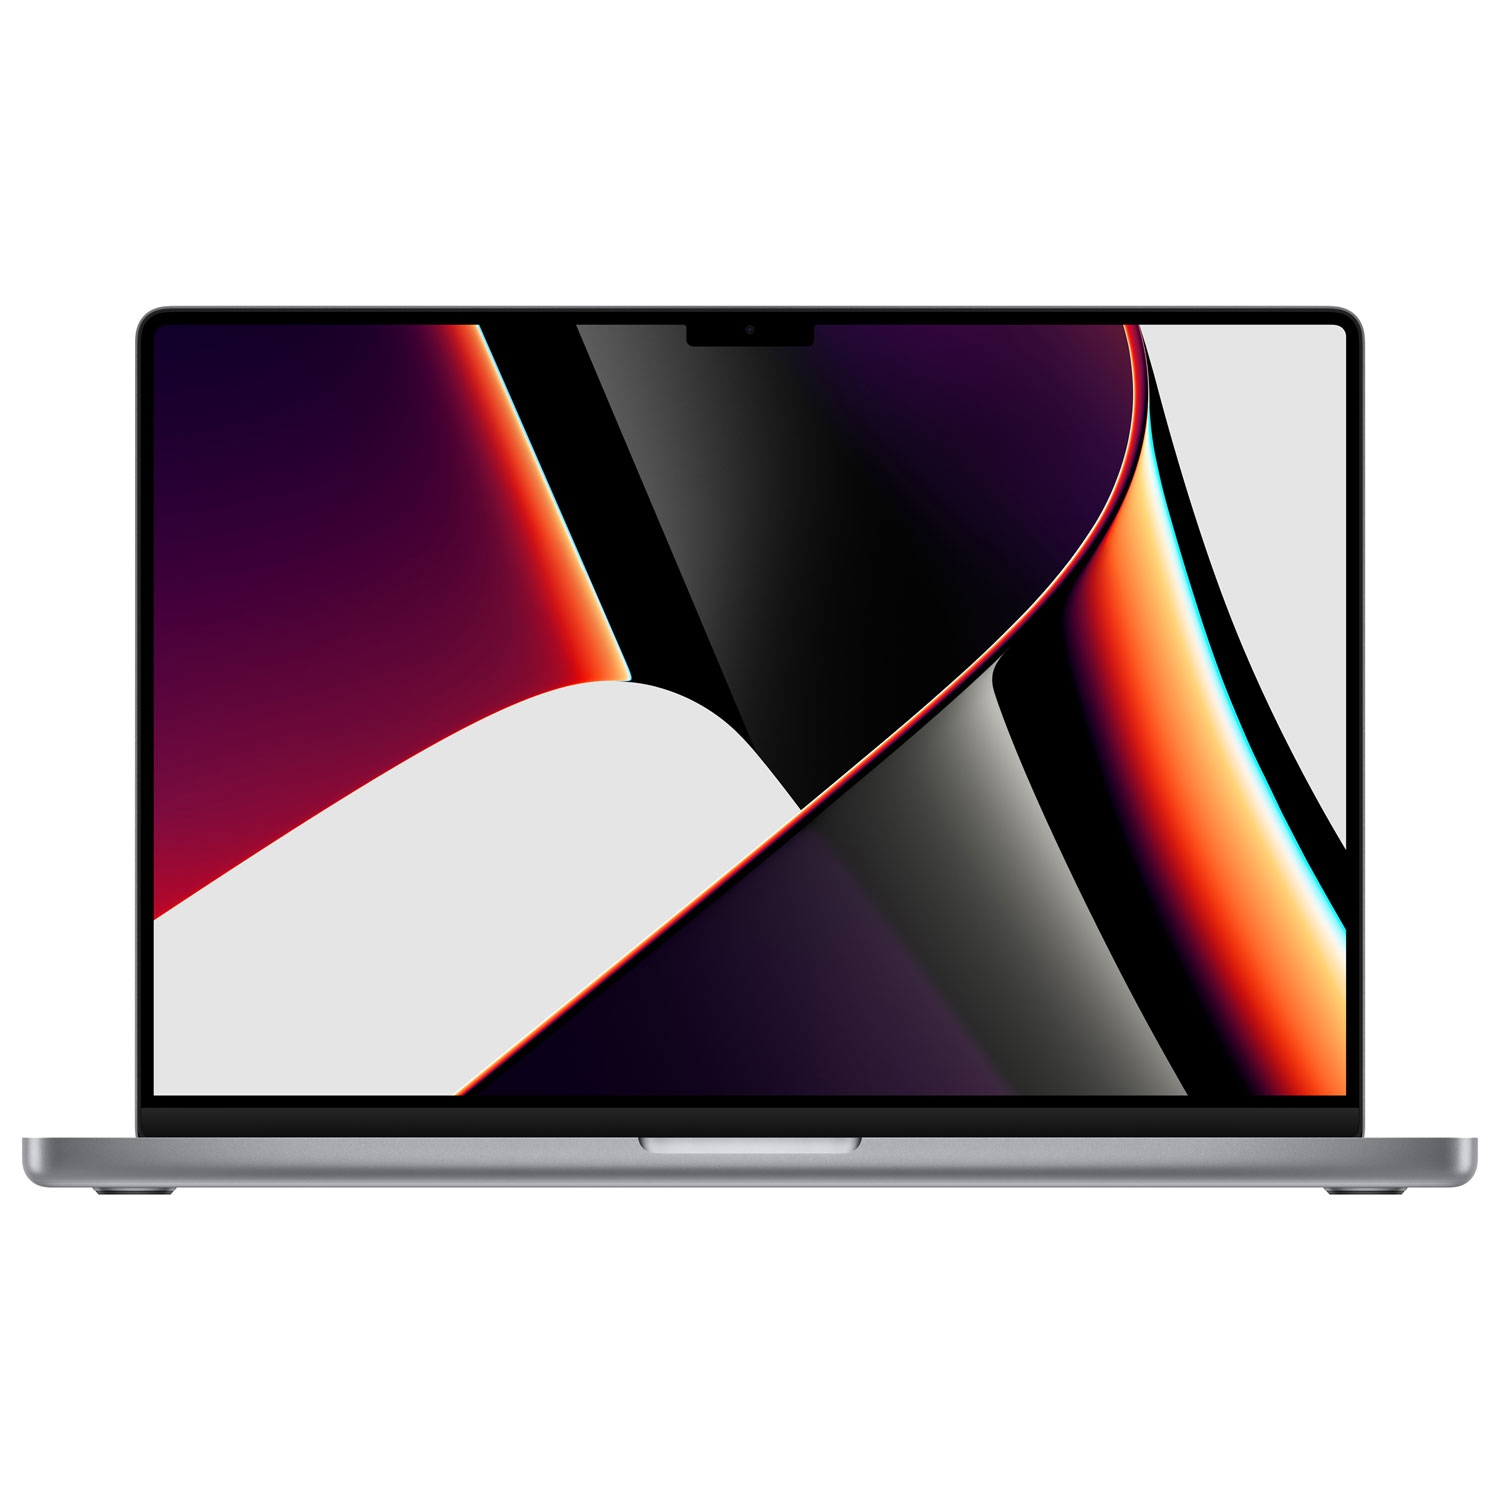 Refurbished (Fair) - Apple MacBook Pro 16" (2021) - Space Grey (Apple M1 Pro Chip / 512GB SSD / 16GB RAM) - English